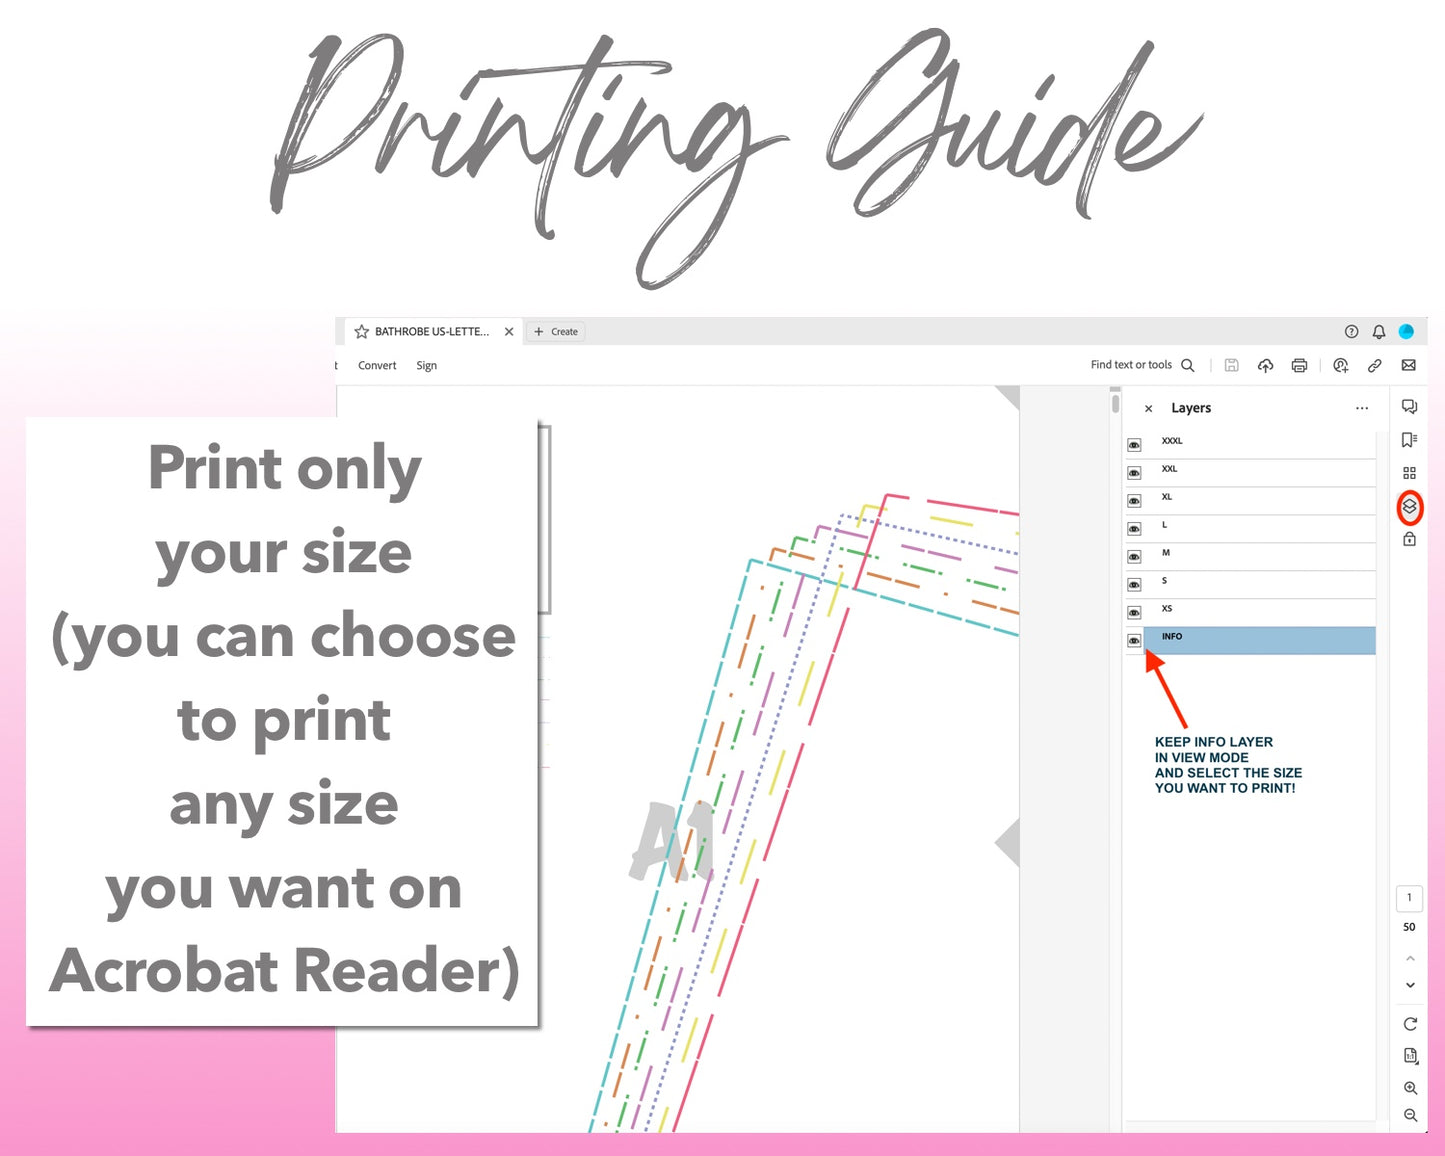 Bathrobe sewing pattern printing guide.